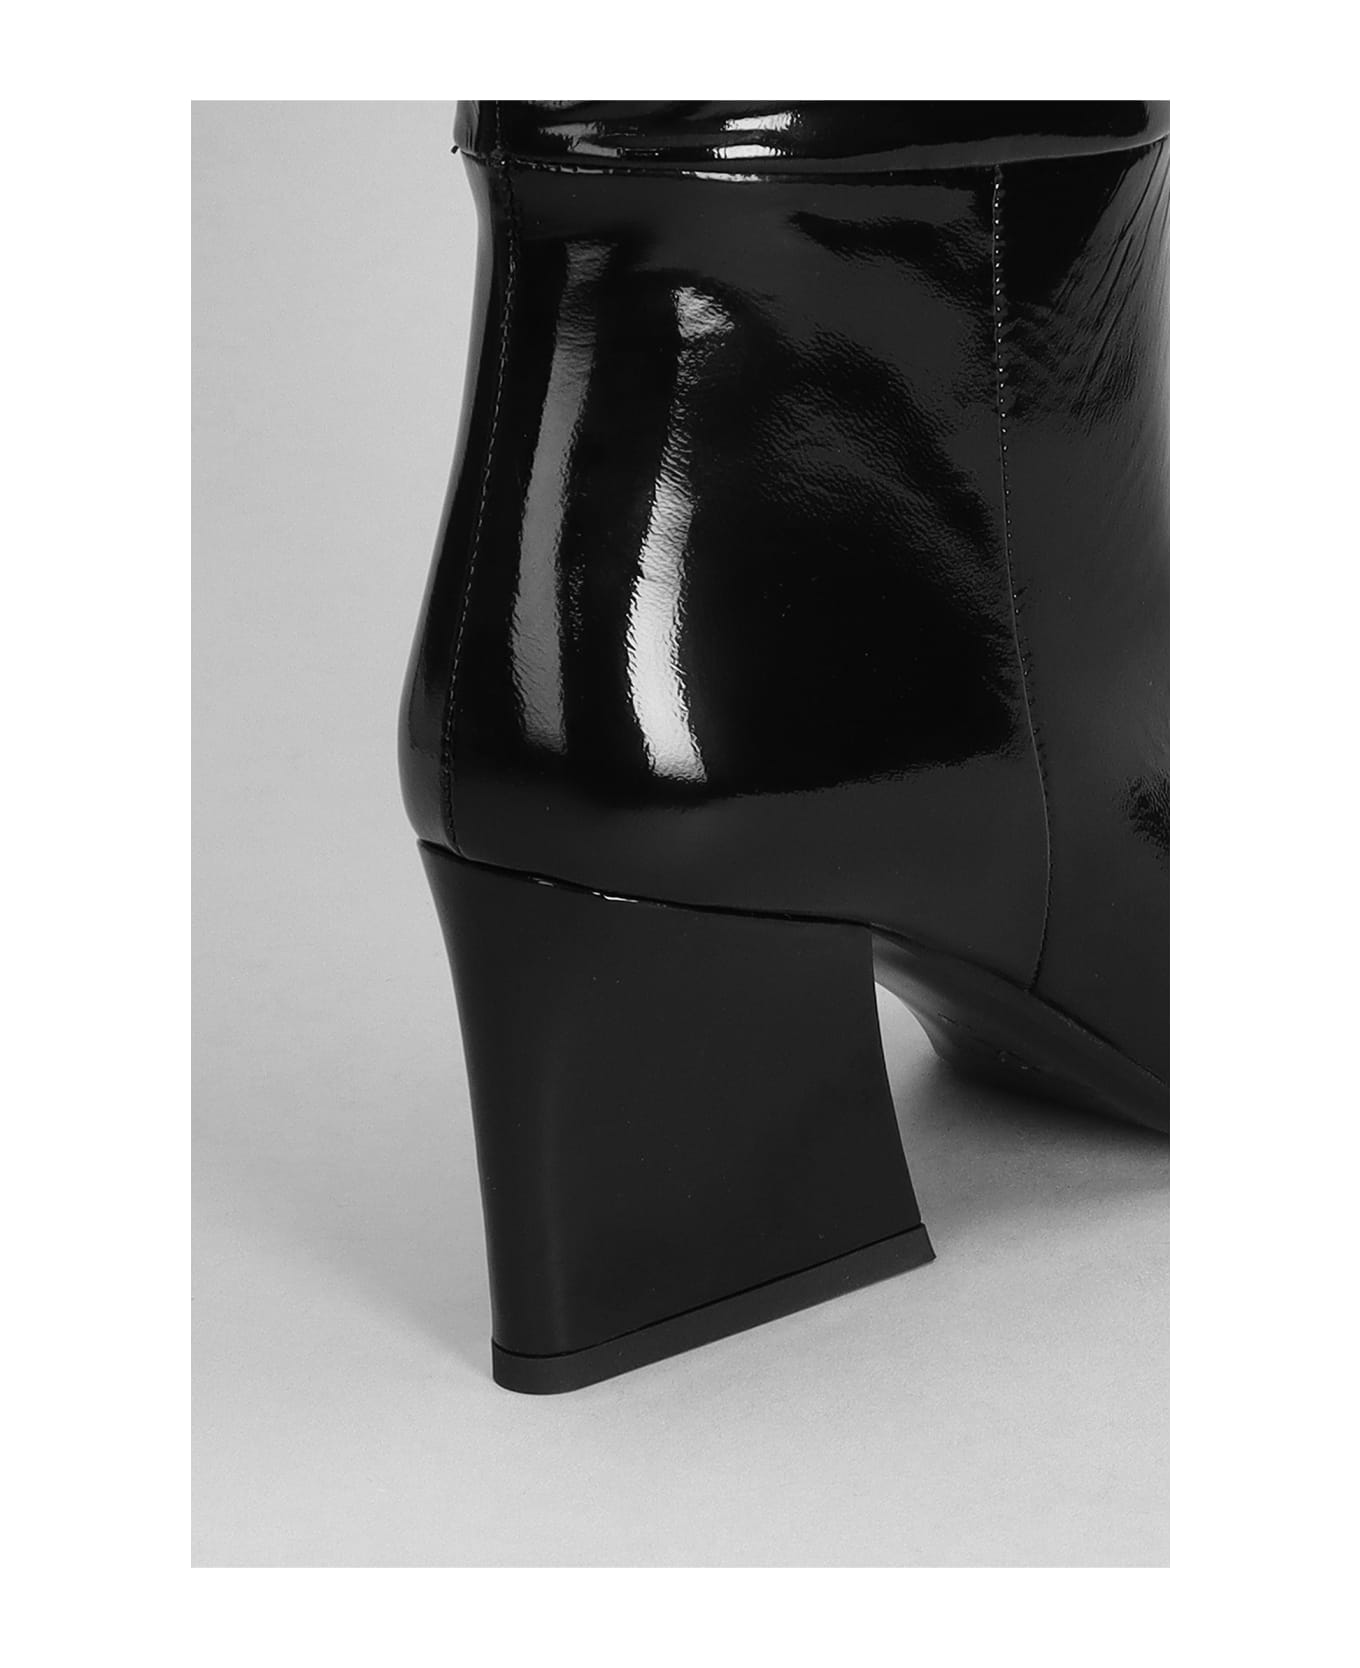 Marc Ellis High Heels Boots In Black Patent Leather - black